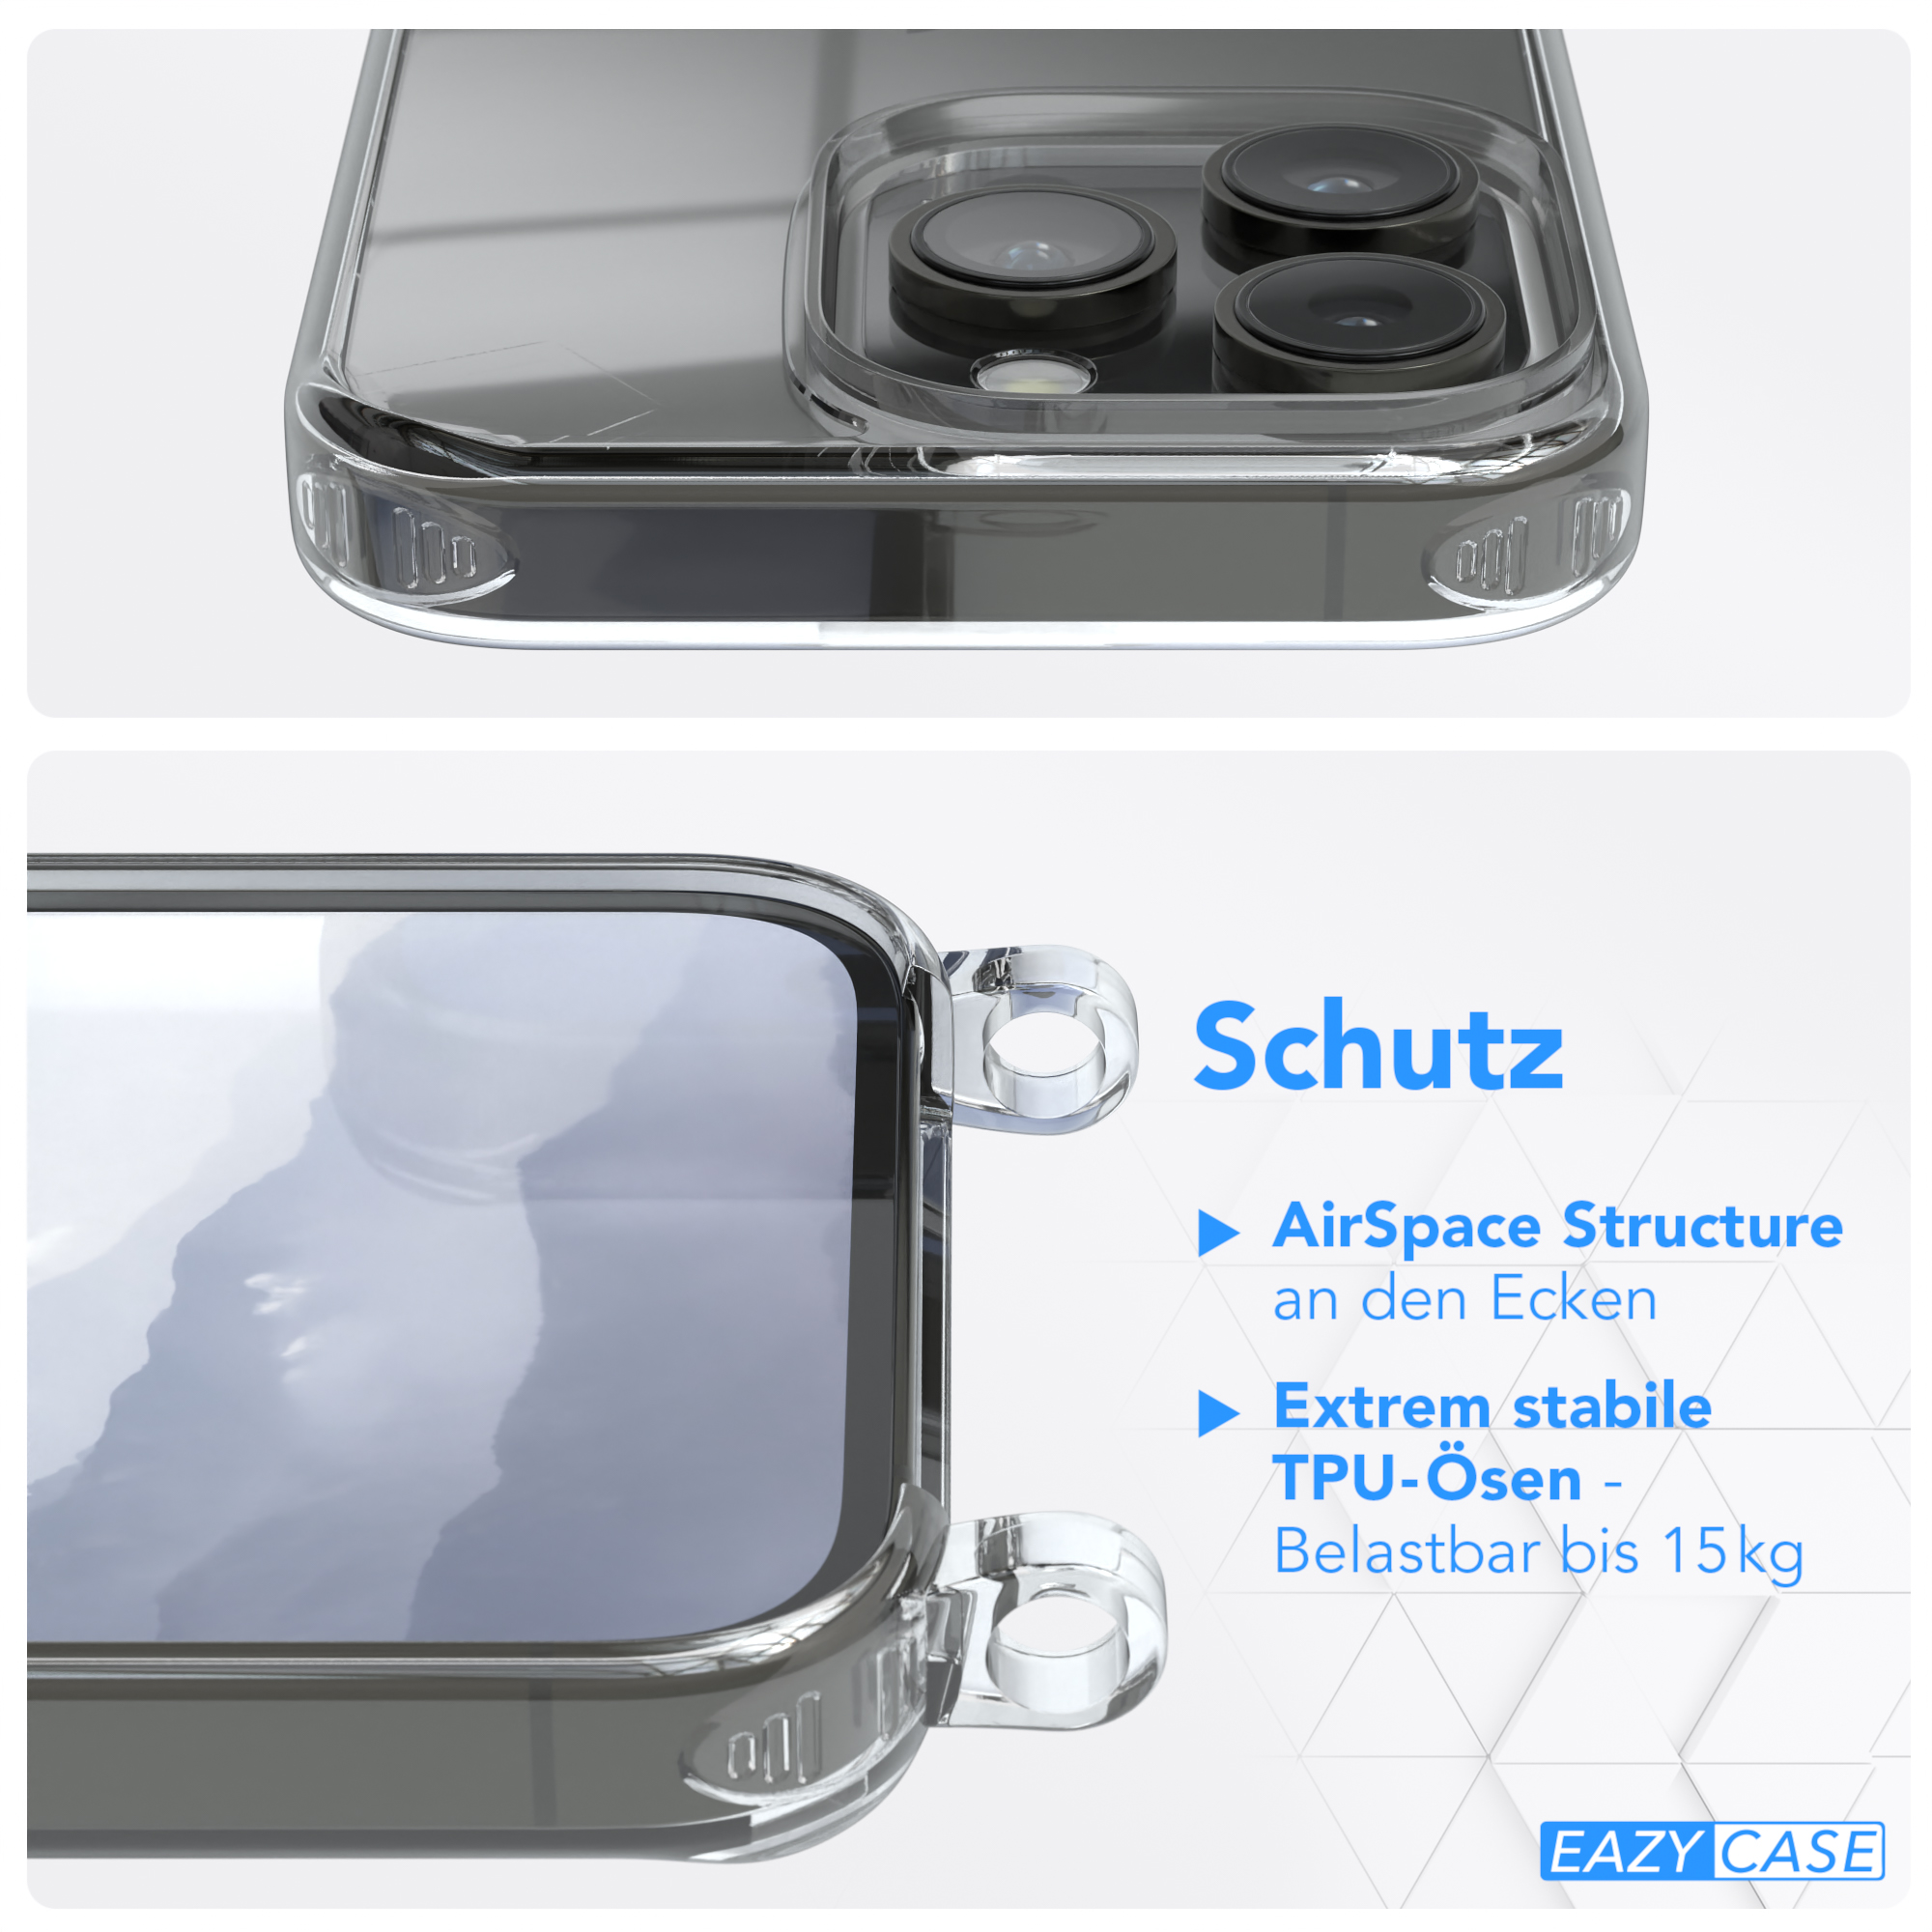 Pro, CASE Blau mit 14 Clear Apple, iPhone Umhängeband, Cover EAZY Umhängetasche,